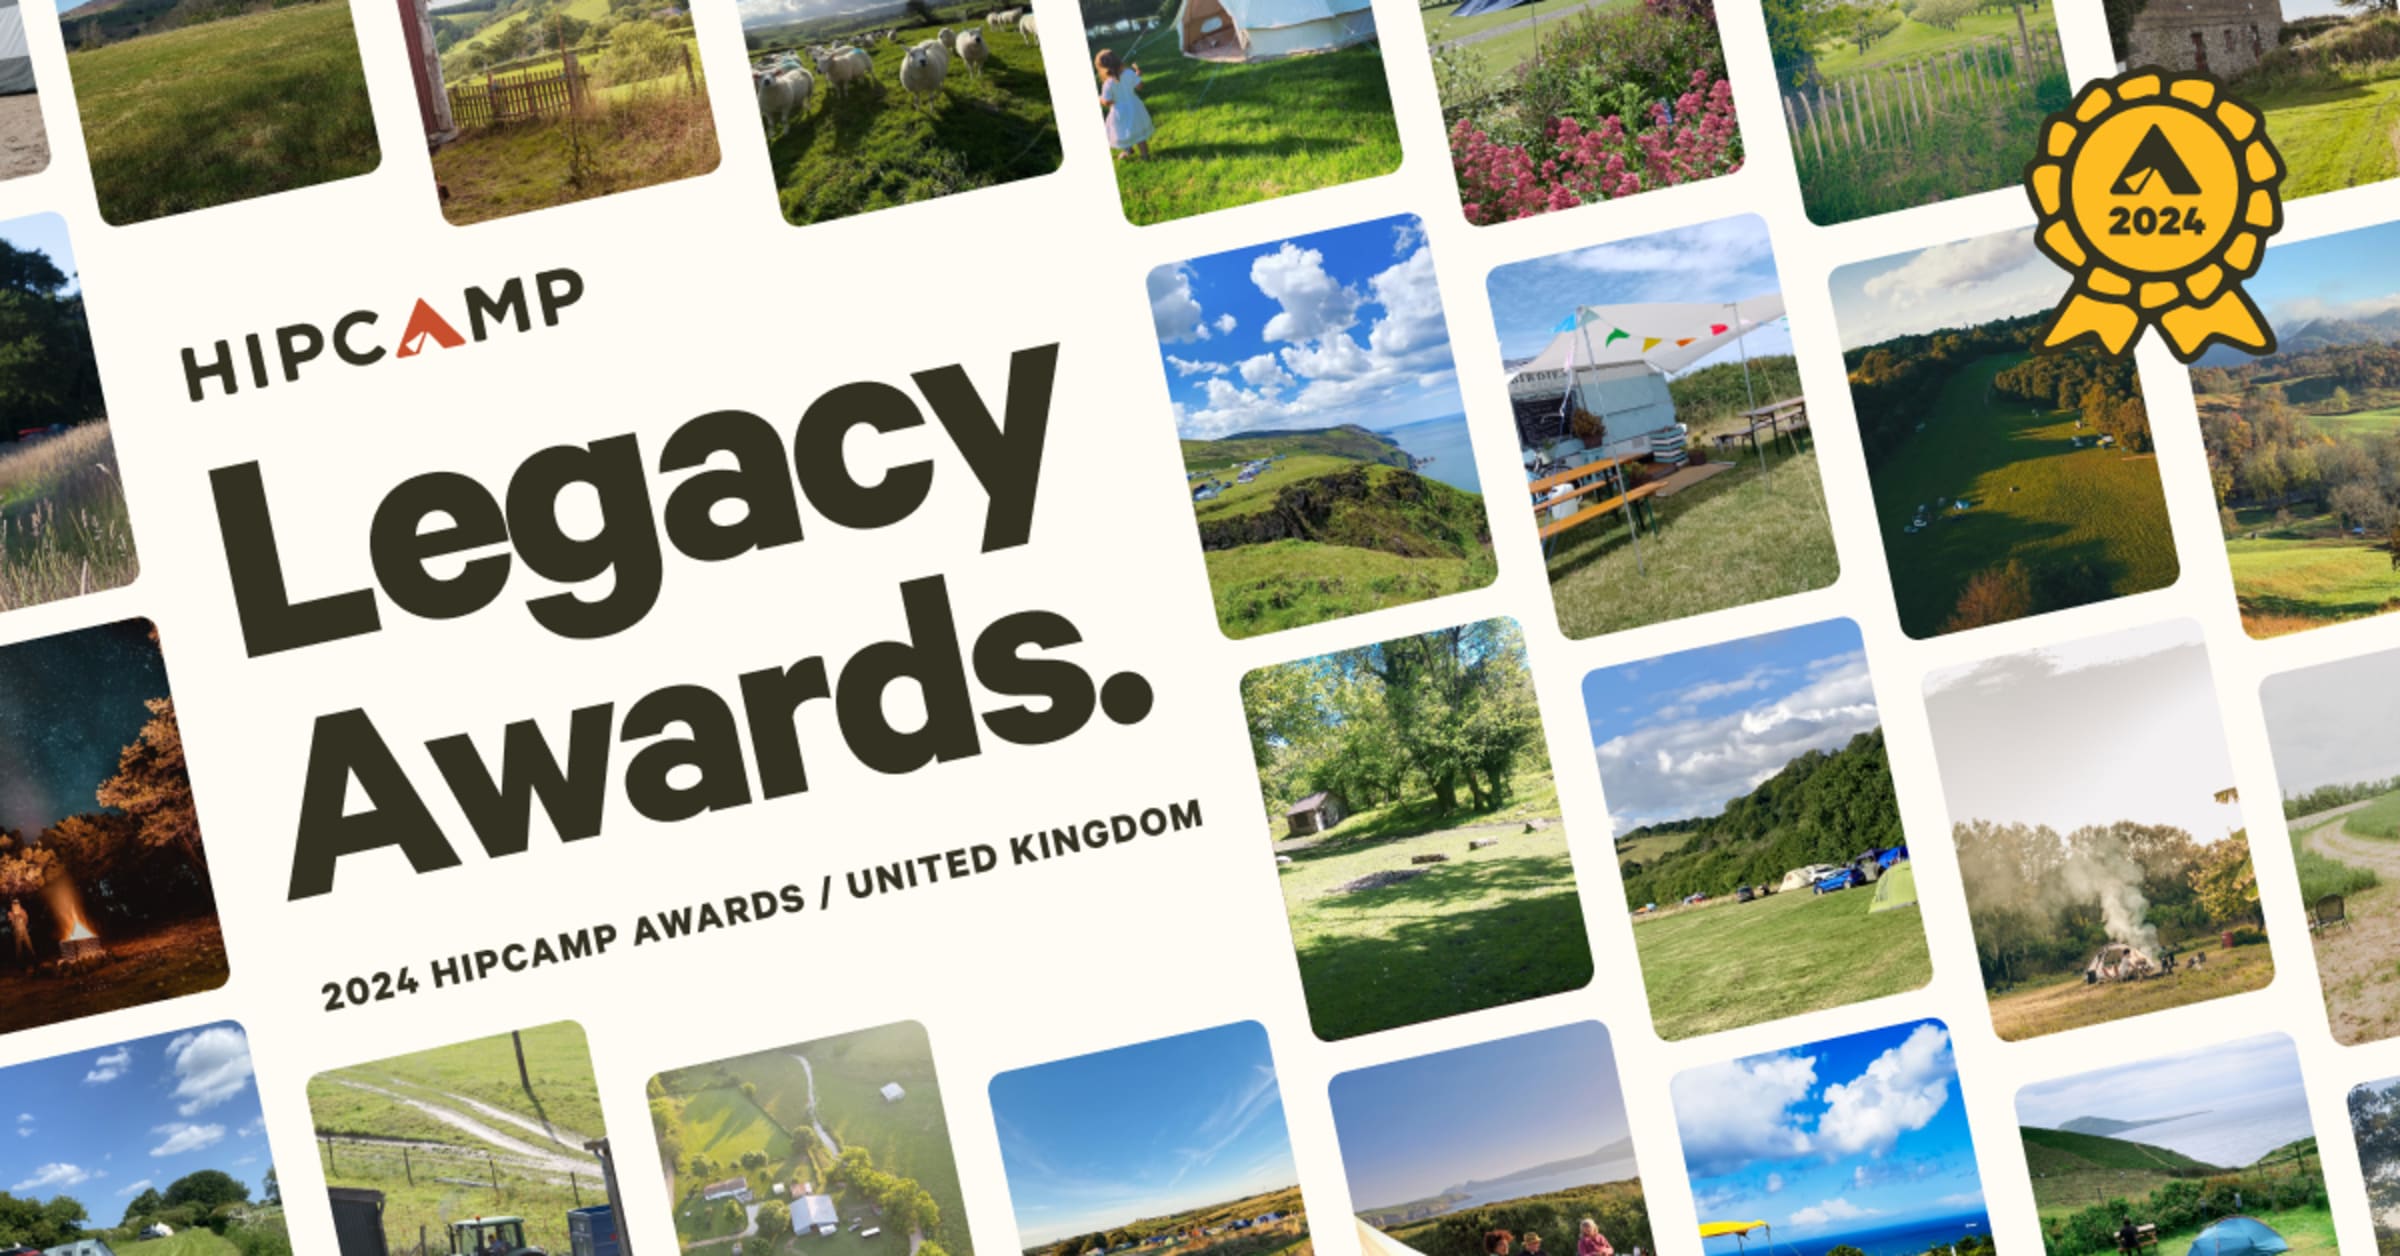 Hipcamp Legacy Awards UK